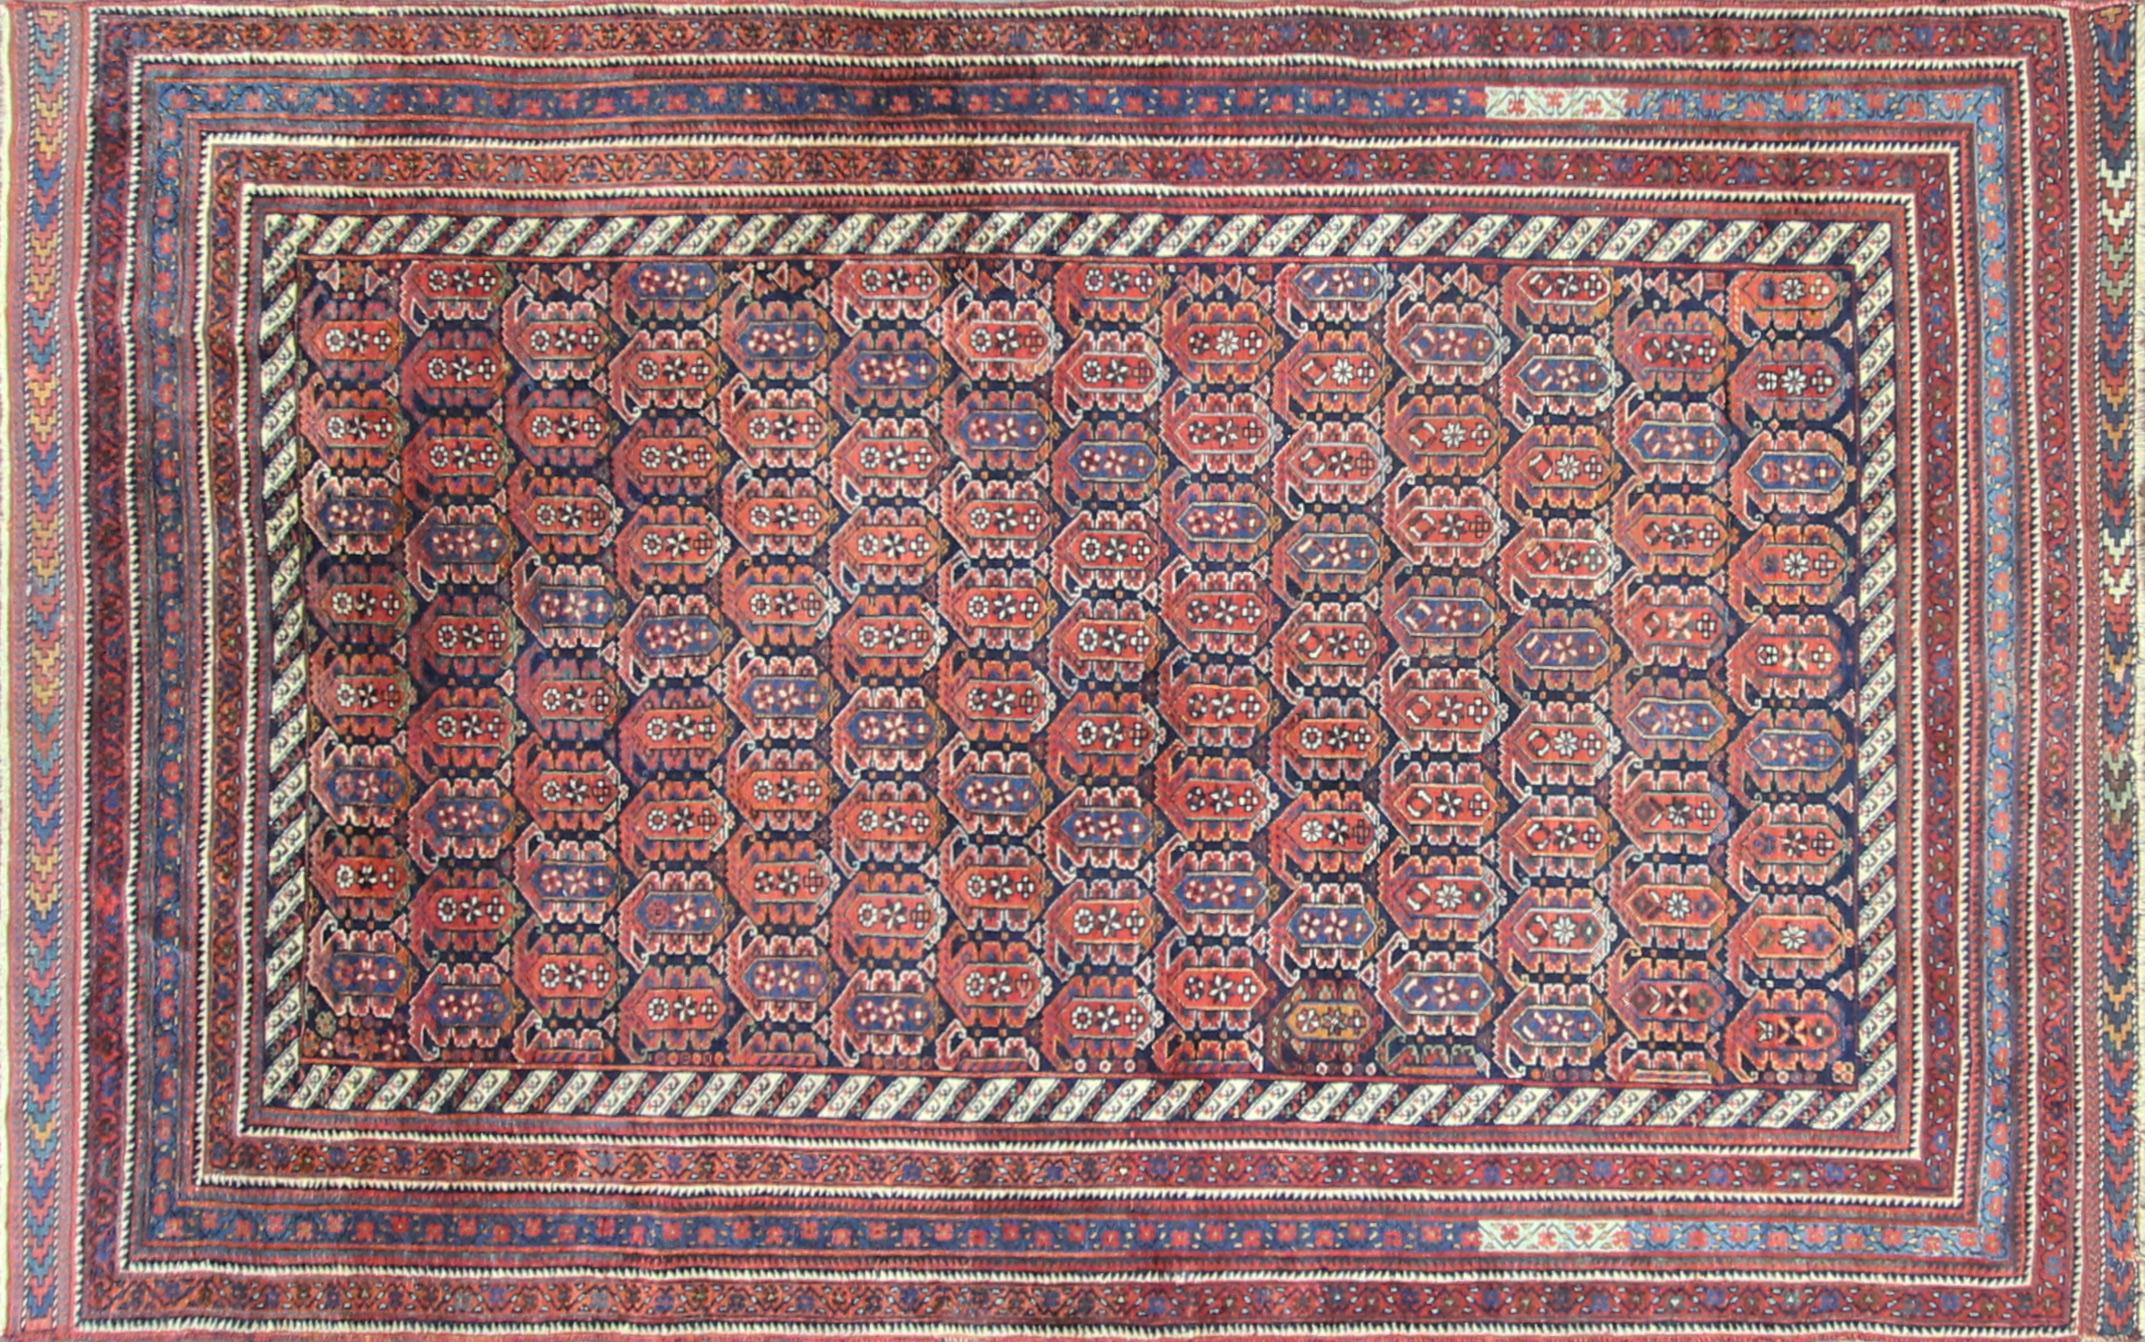 19th Century Antique Persian Afshar Carpet, Magnificent, Tribal, 5'8